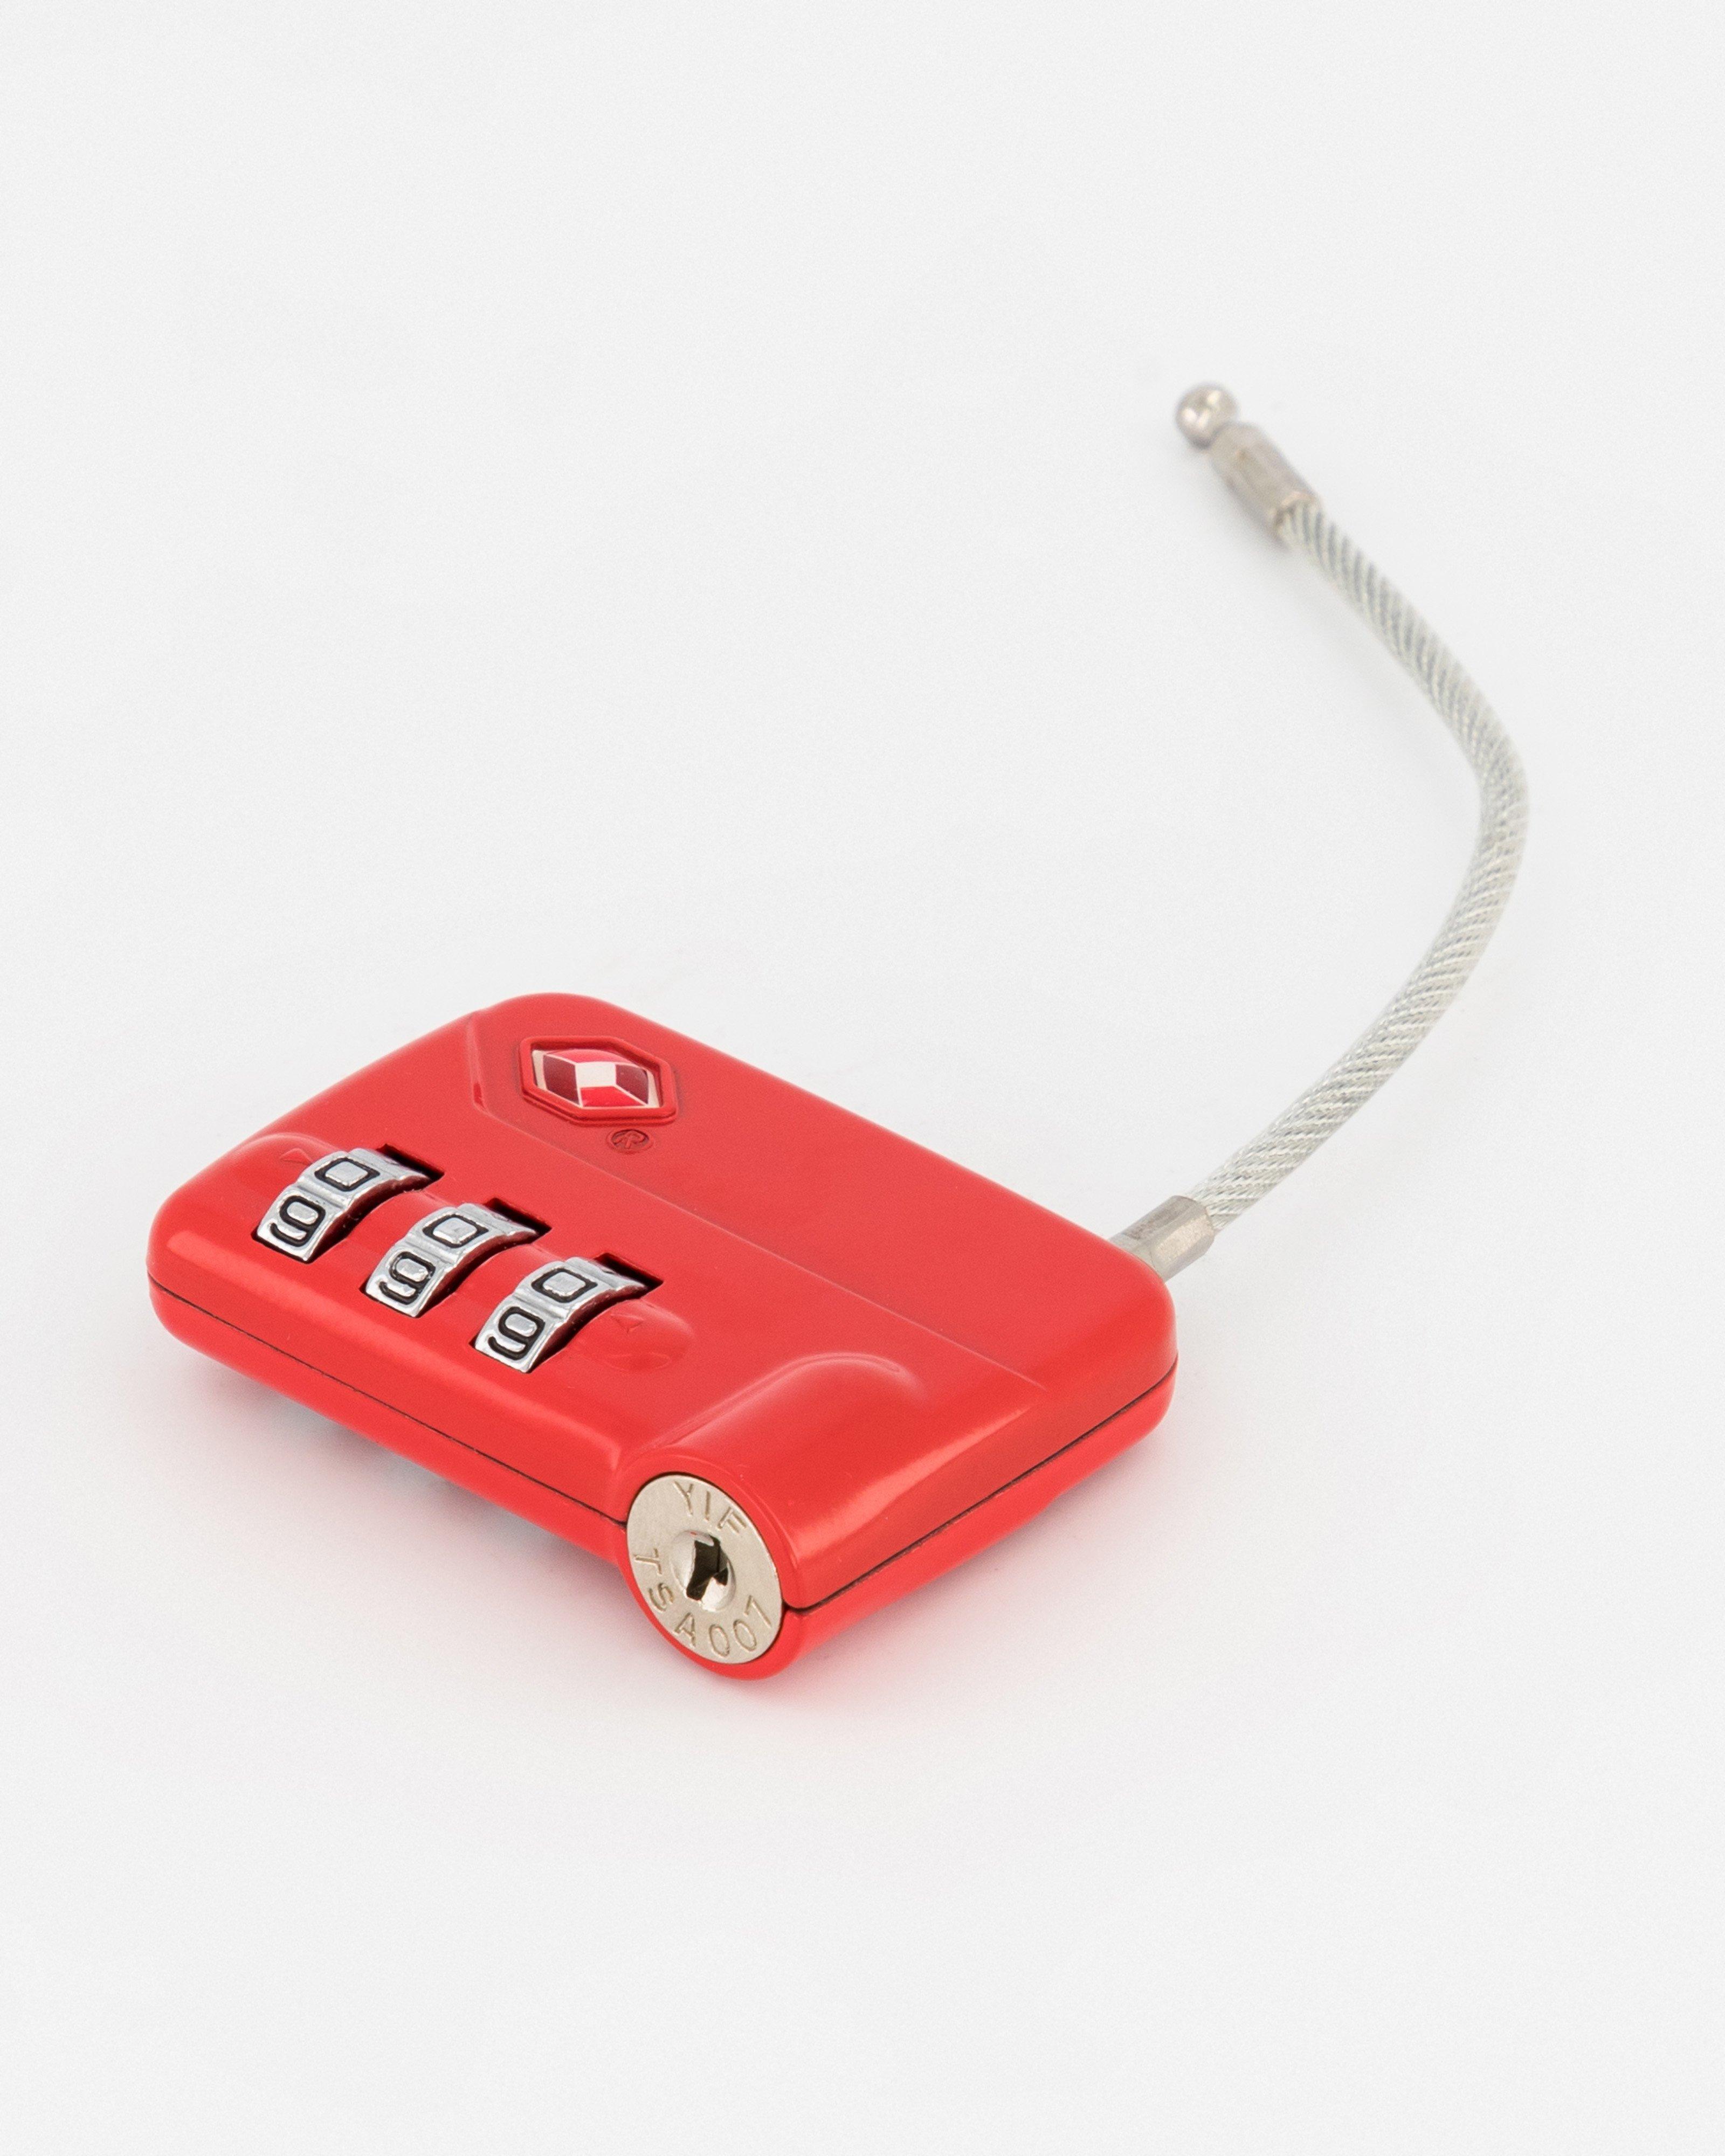 Cape Union 3-Dial Combination Cable TSA Lock -  Red